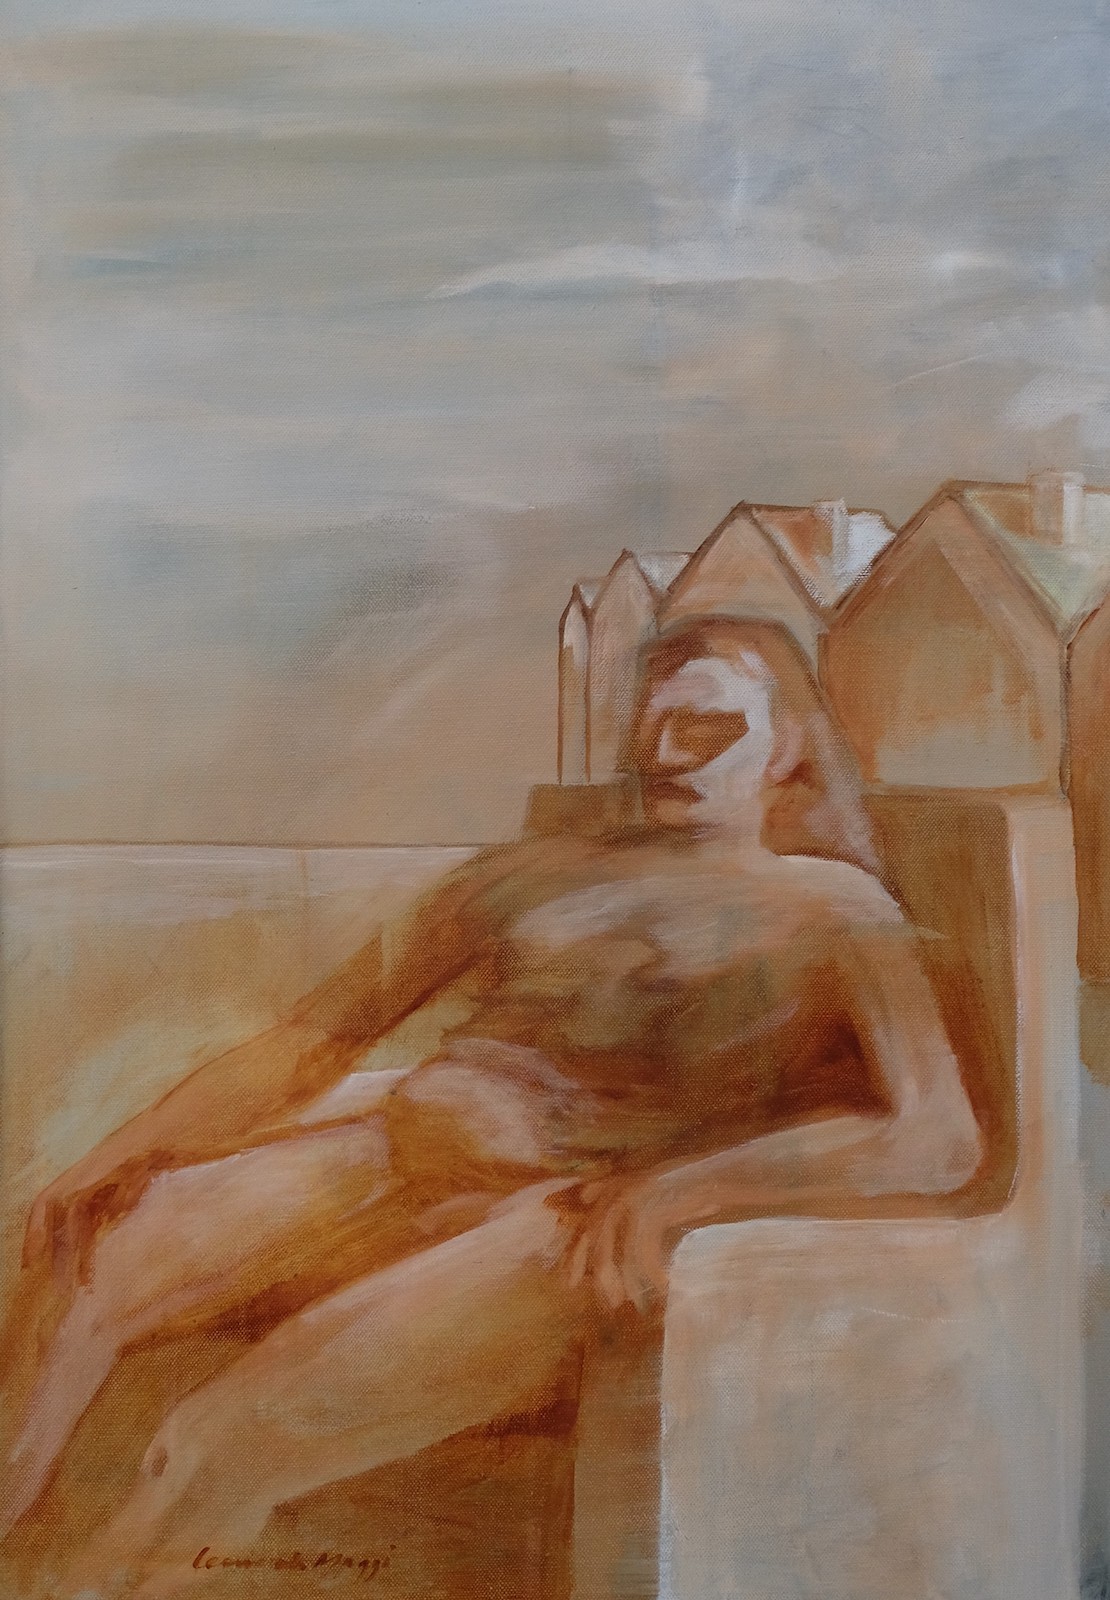 Monocromia “il riposo” 2008 oil on canvas 50x70